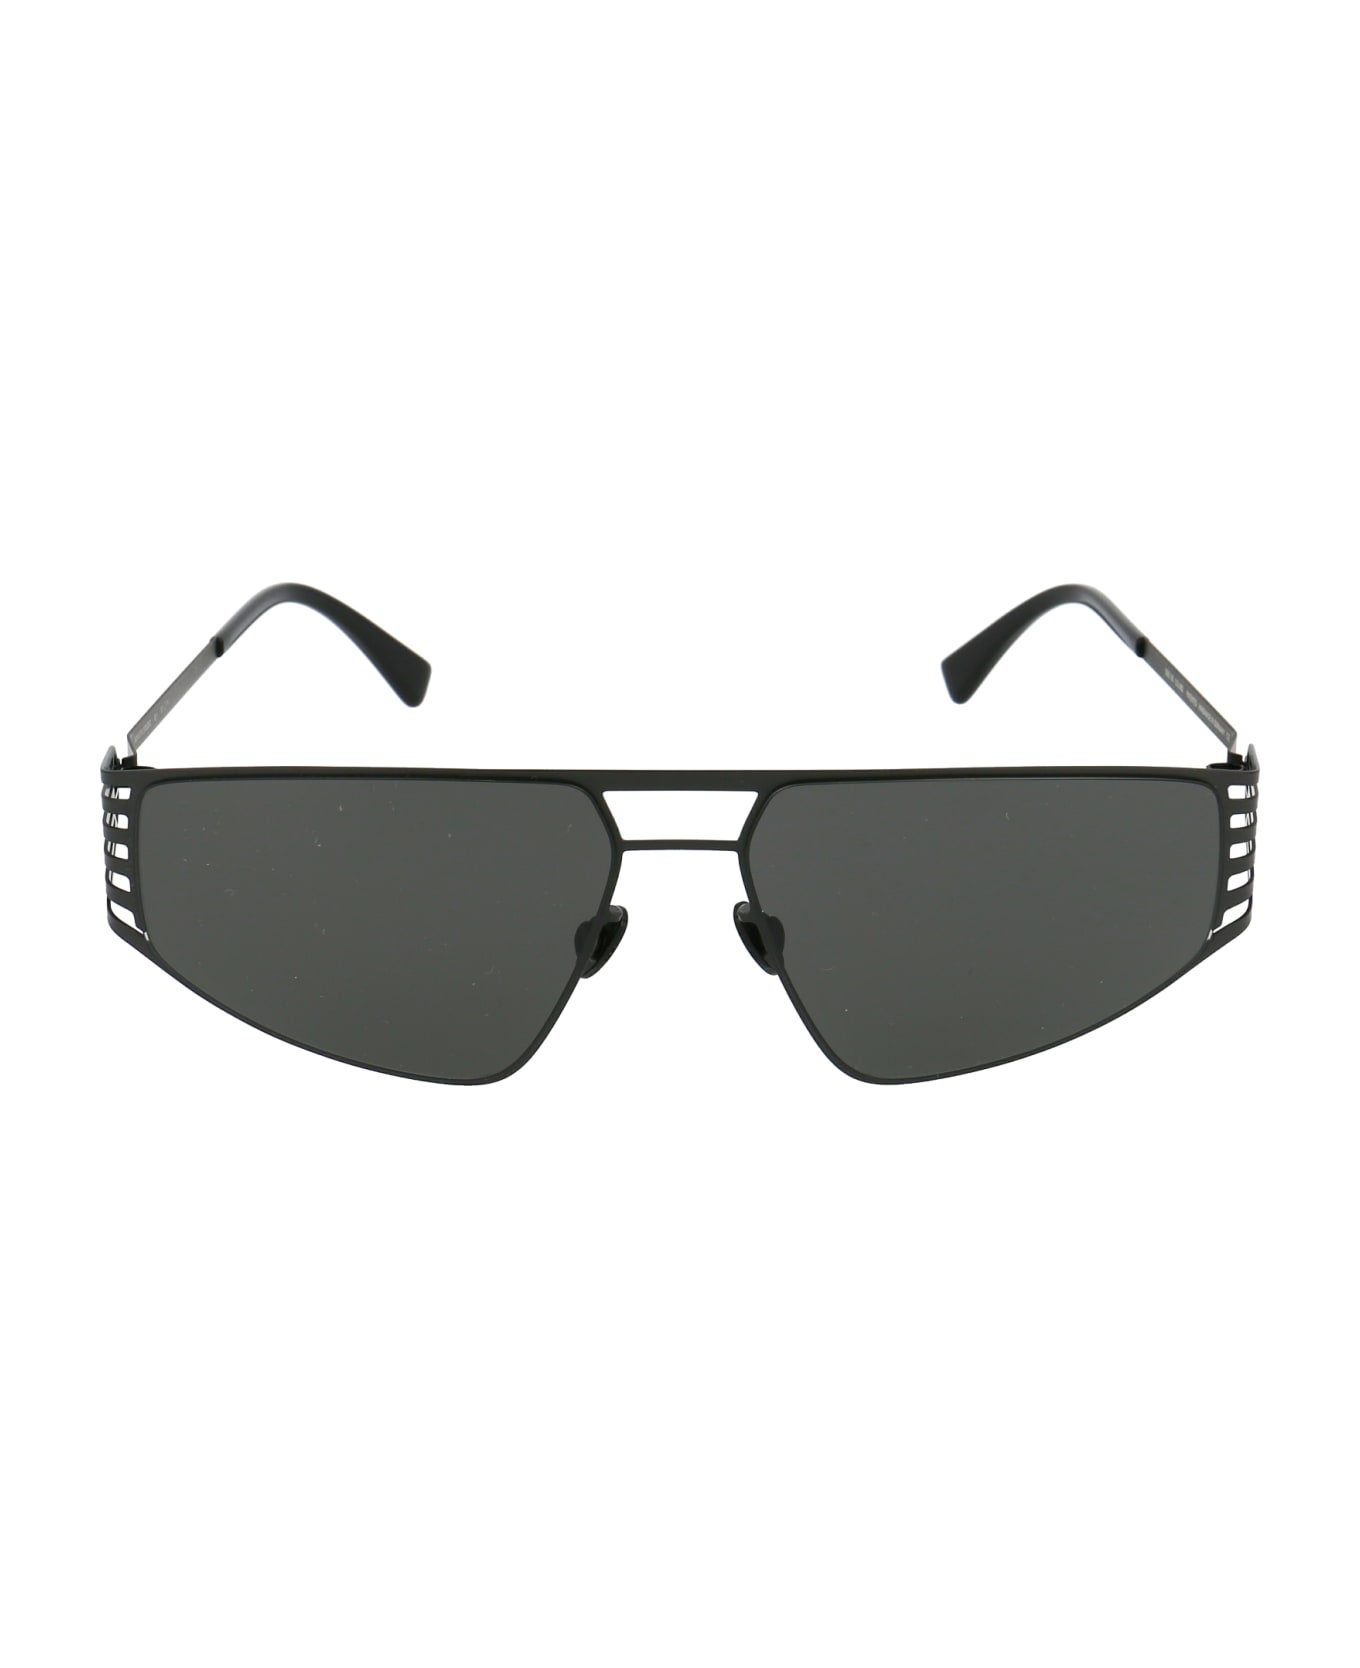 Mykita Studio8.1 Sunglasses - 002 BLACK DARKGREY SOLID